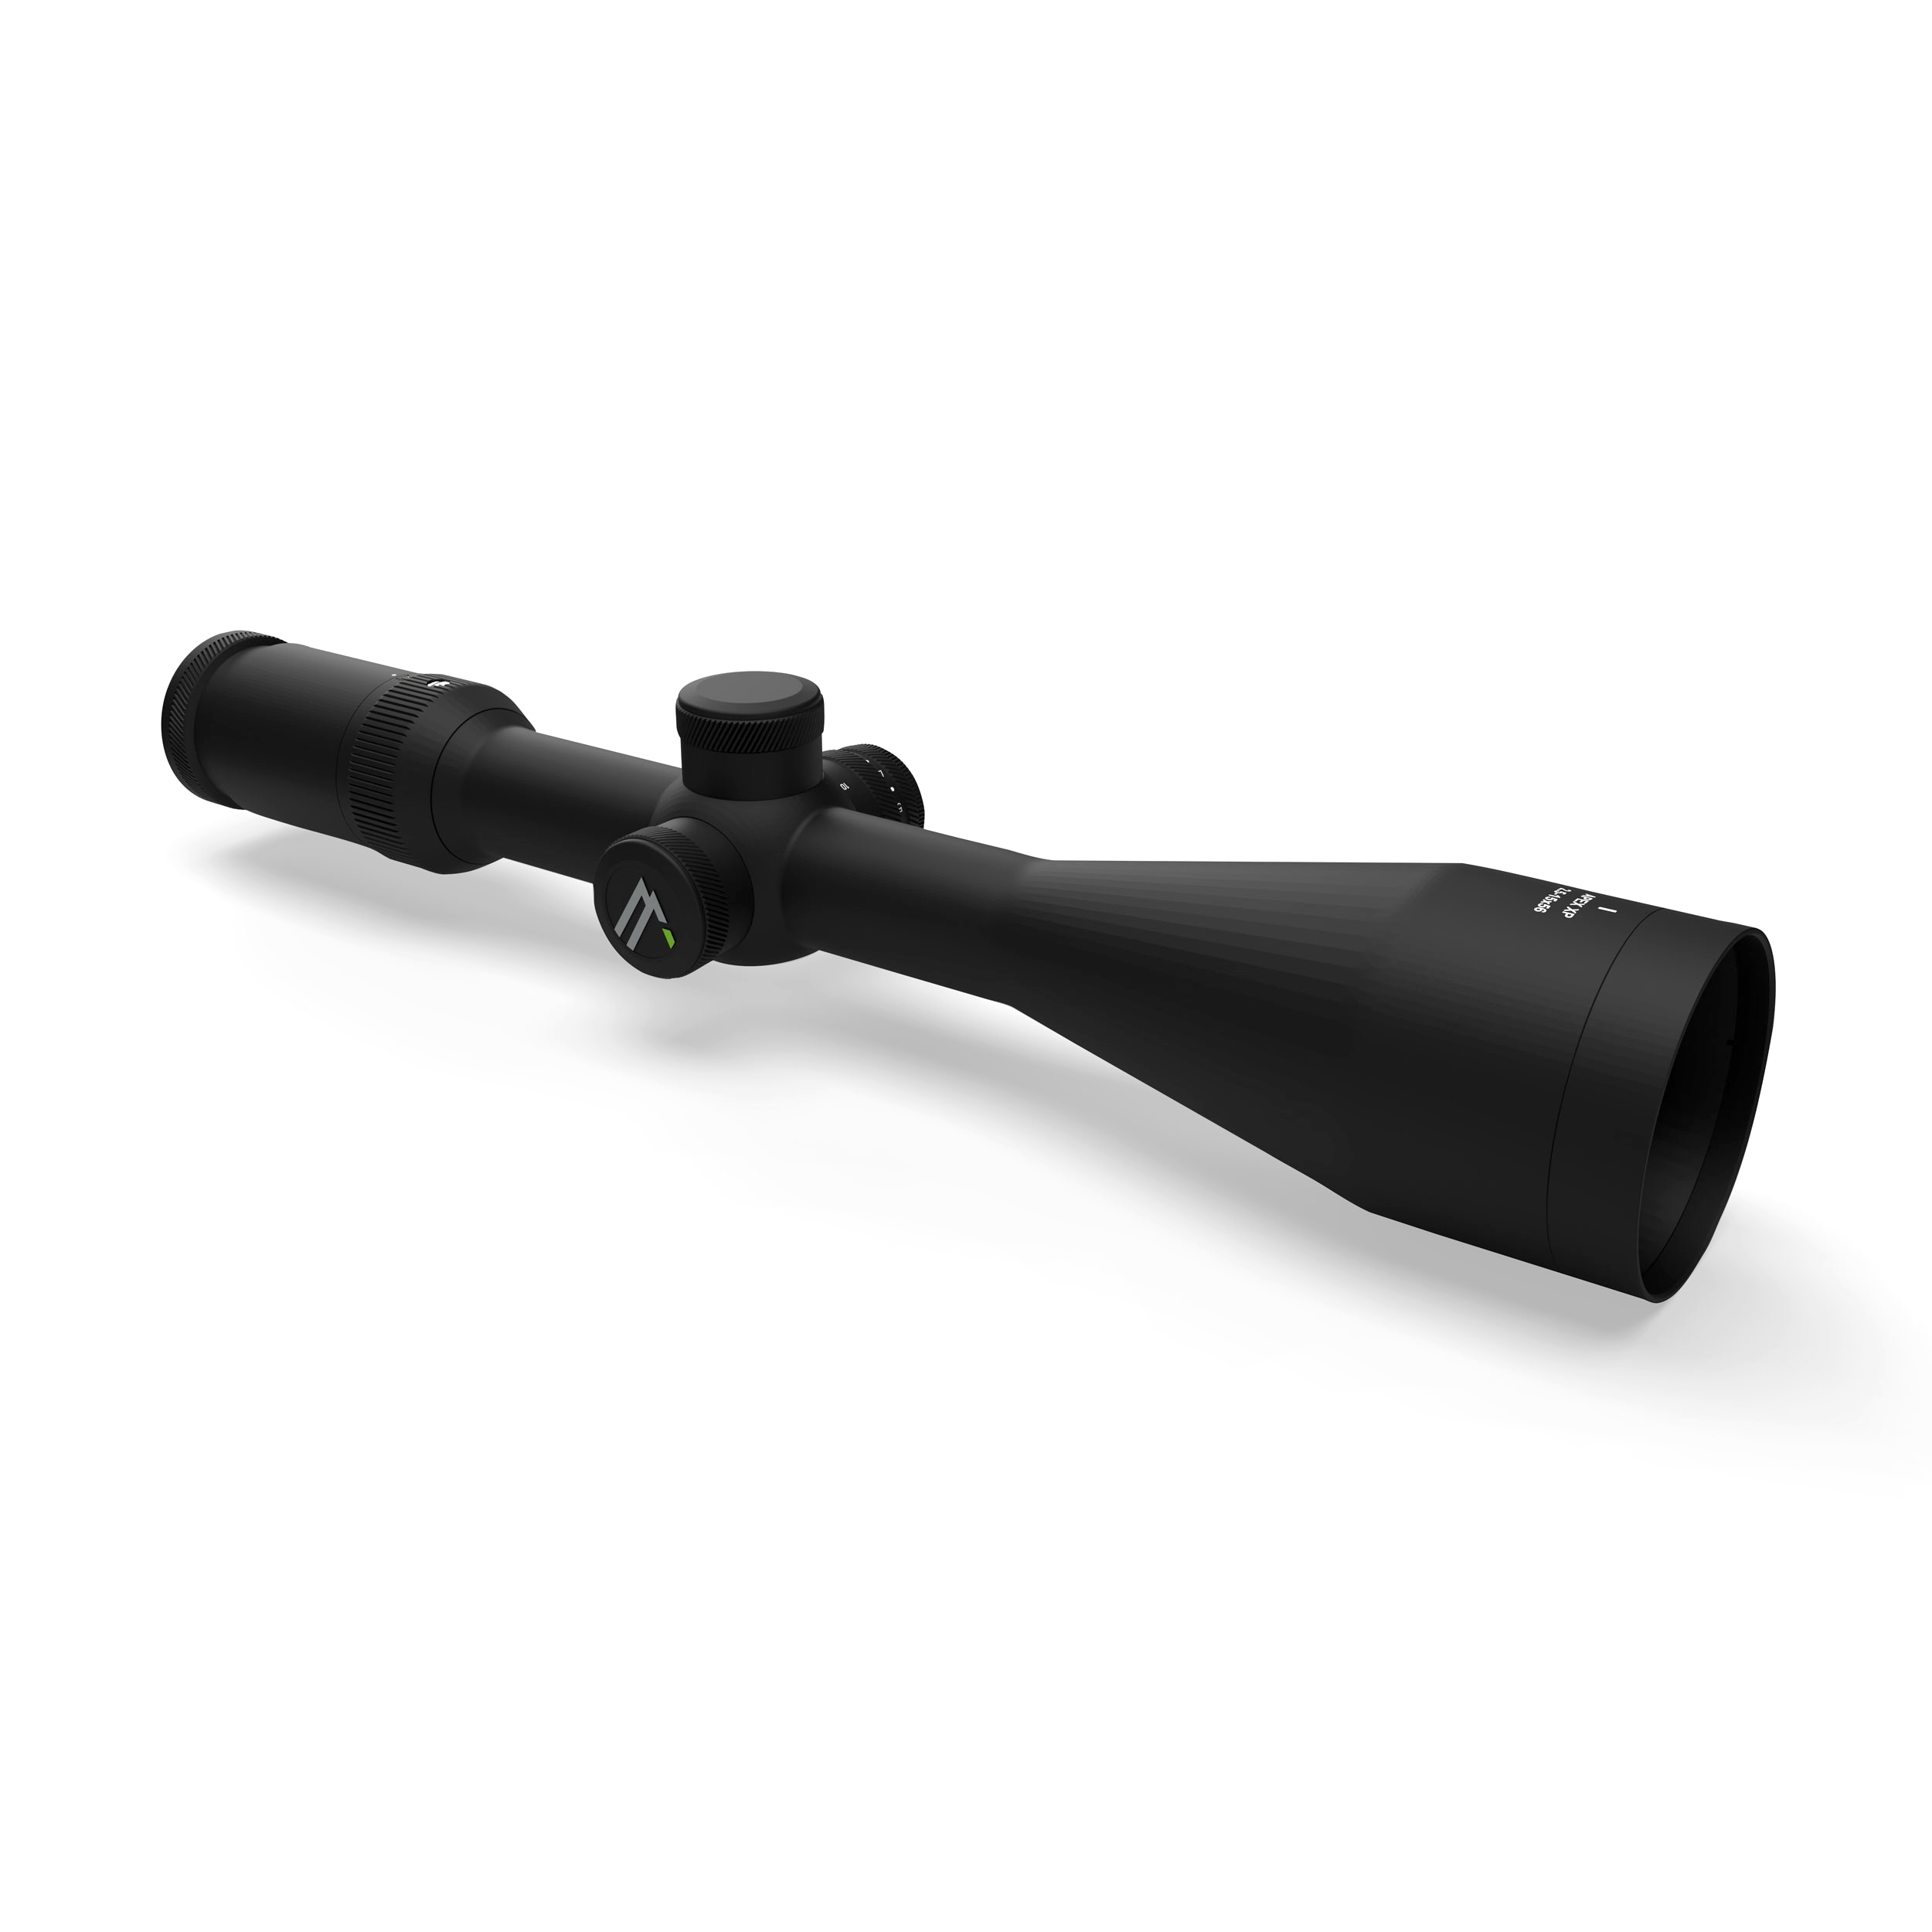 ALPEN OPTICS Apex XP 2.5-15x56 A4 riflescope with SmartDot technology (Refurbished)